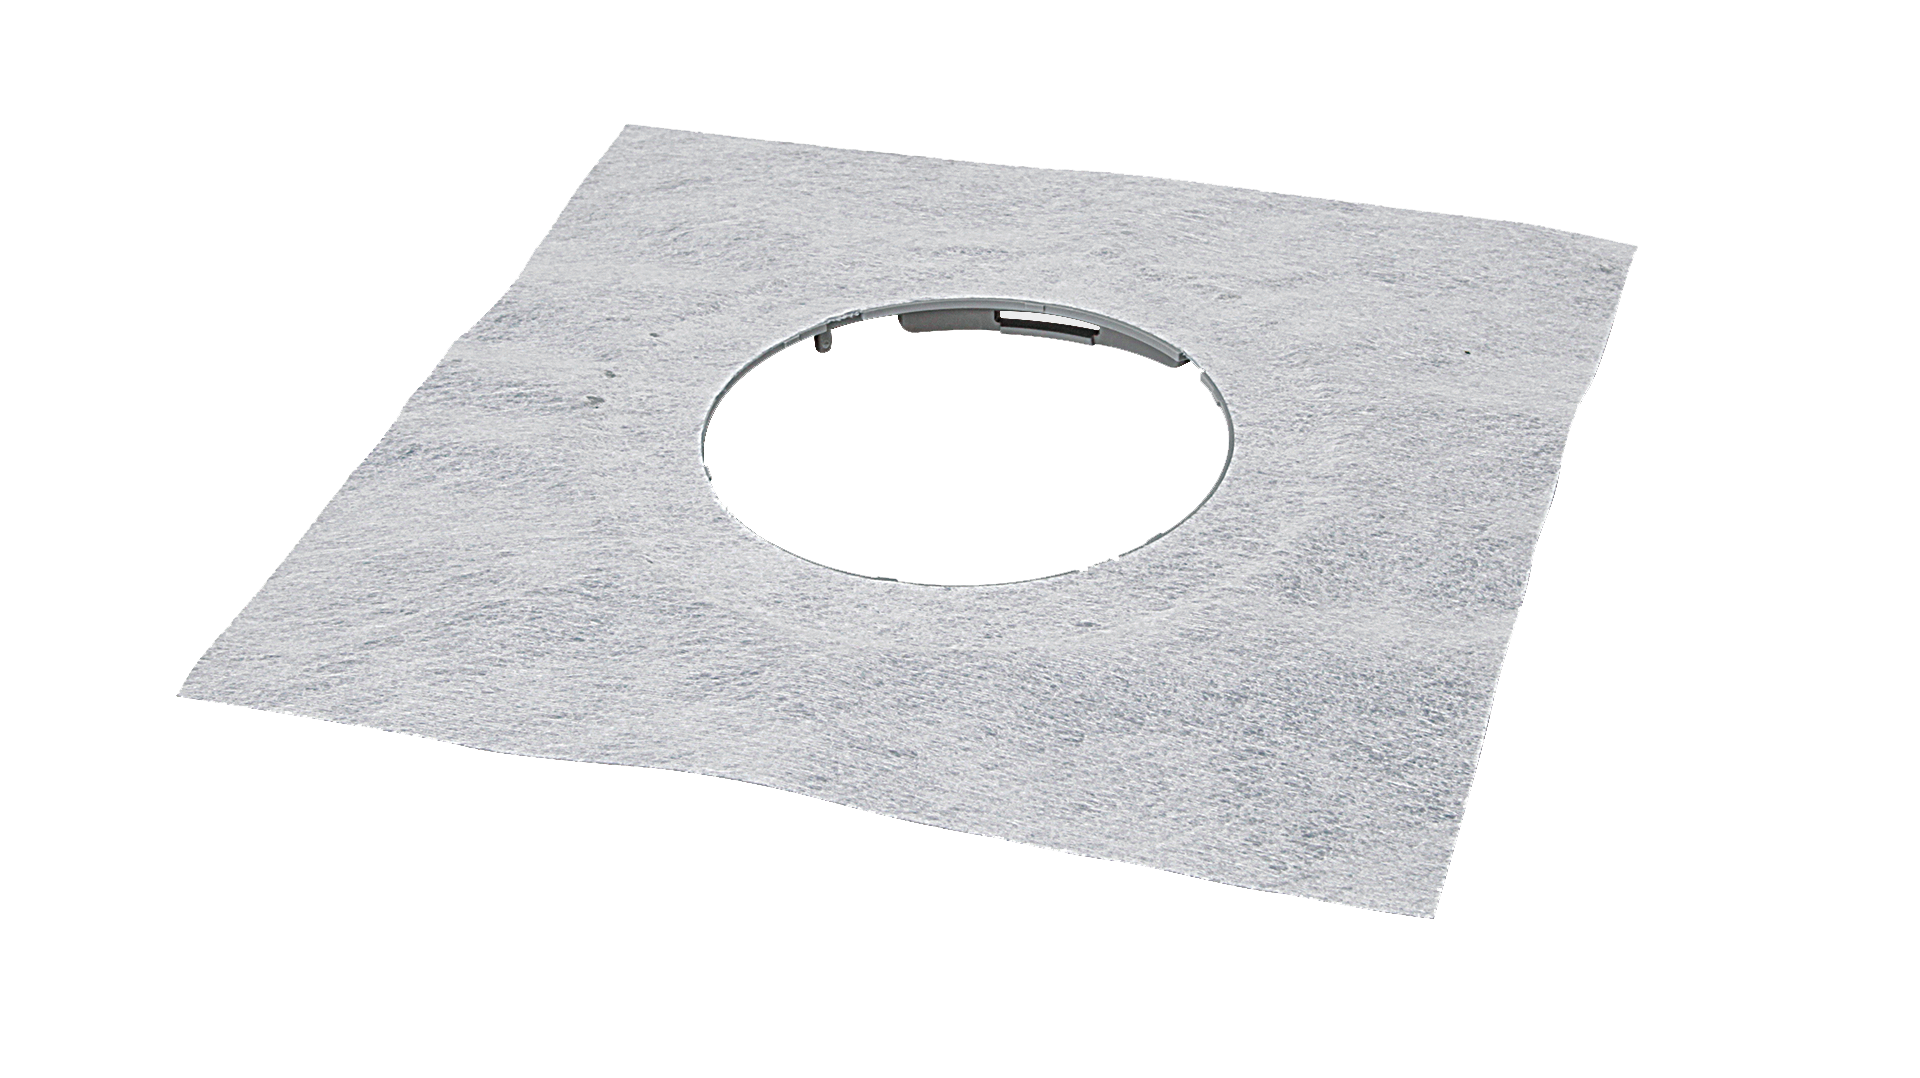 Clip flange for the Ultraflat bathroom drain